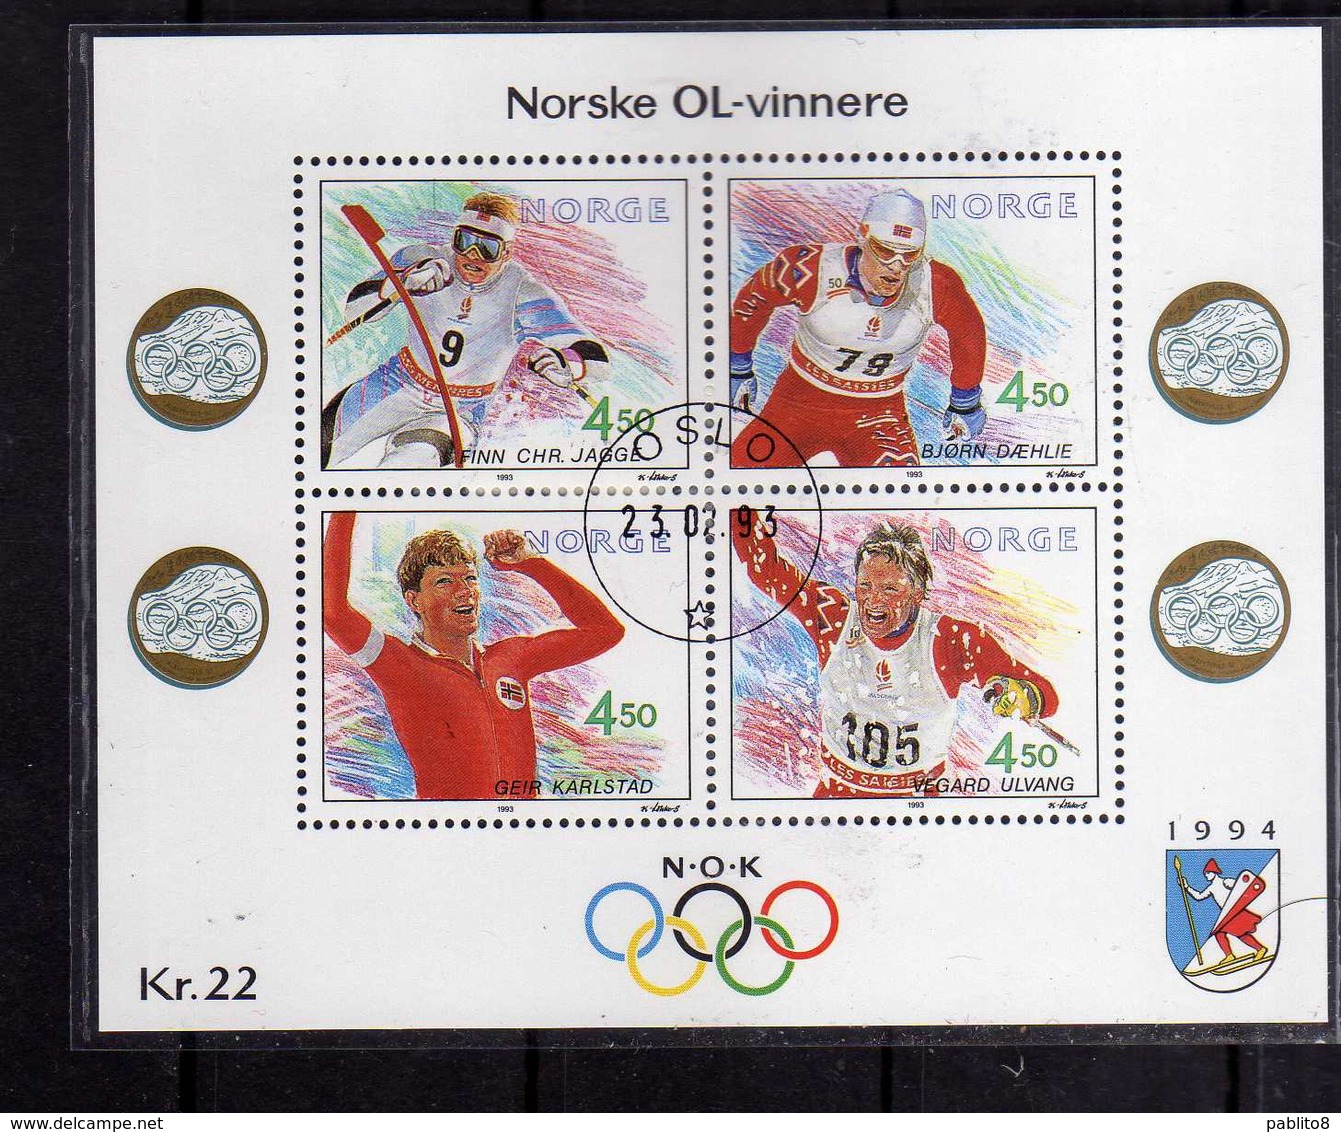 NORWAY NORGE NORVEGIA NORVEGE 1993 NORWEGIAN OLYMPIC WINNERS BLOCCO FOGLIETTO BLOCK SHEET FIRST DAY CANCEL FDC - Blocks & Sheetlets